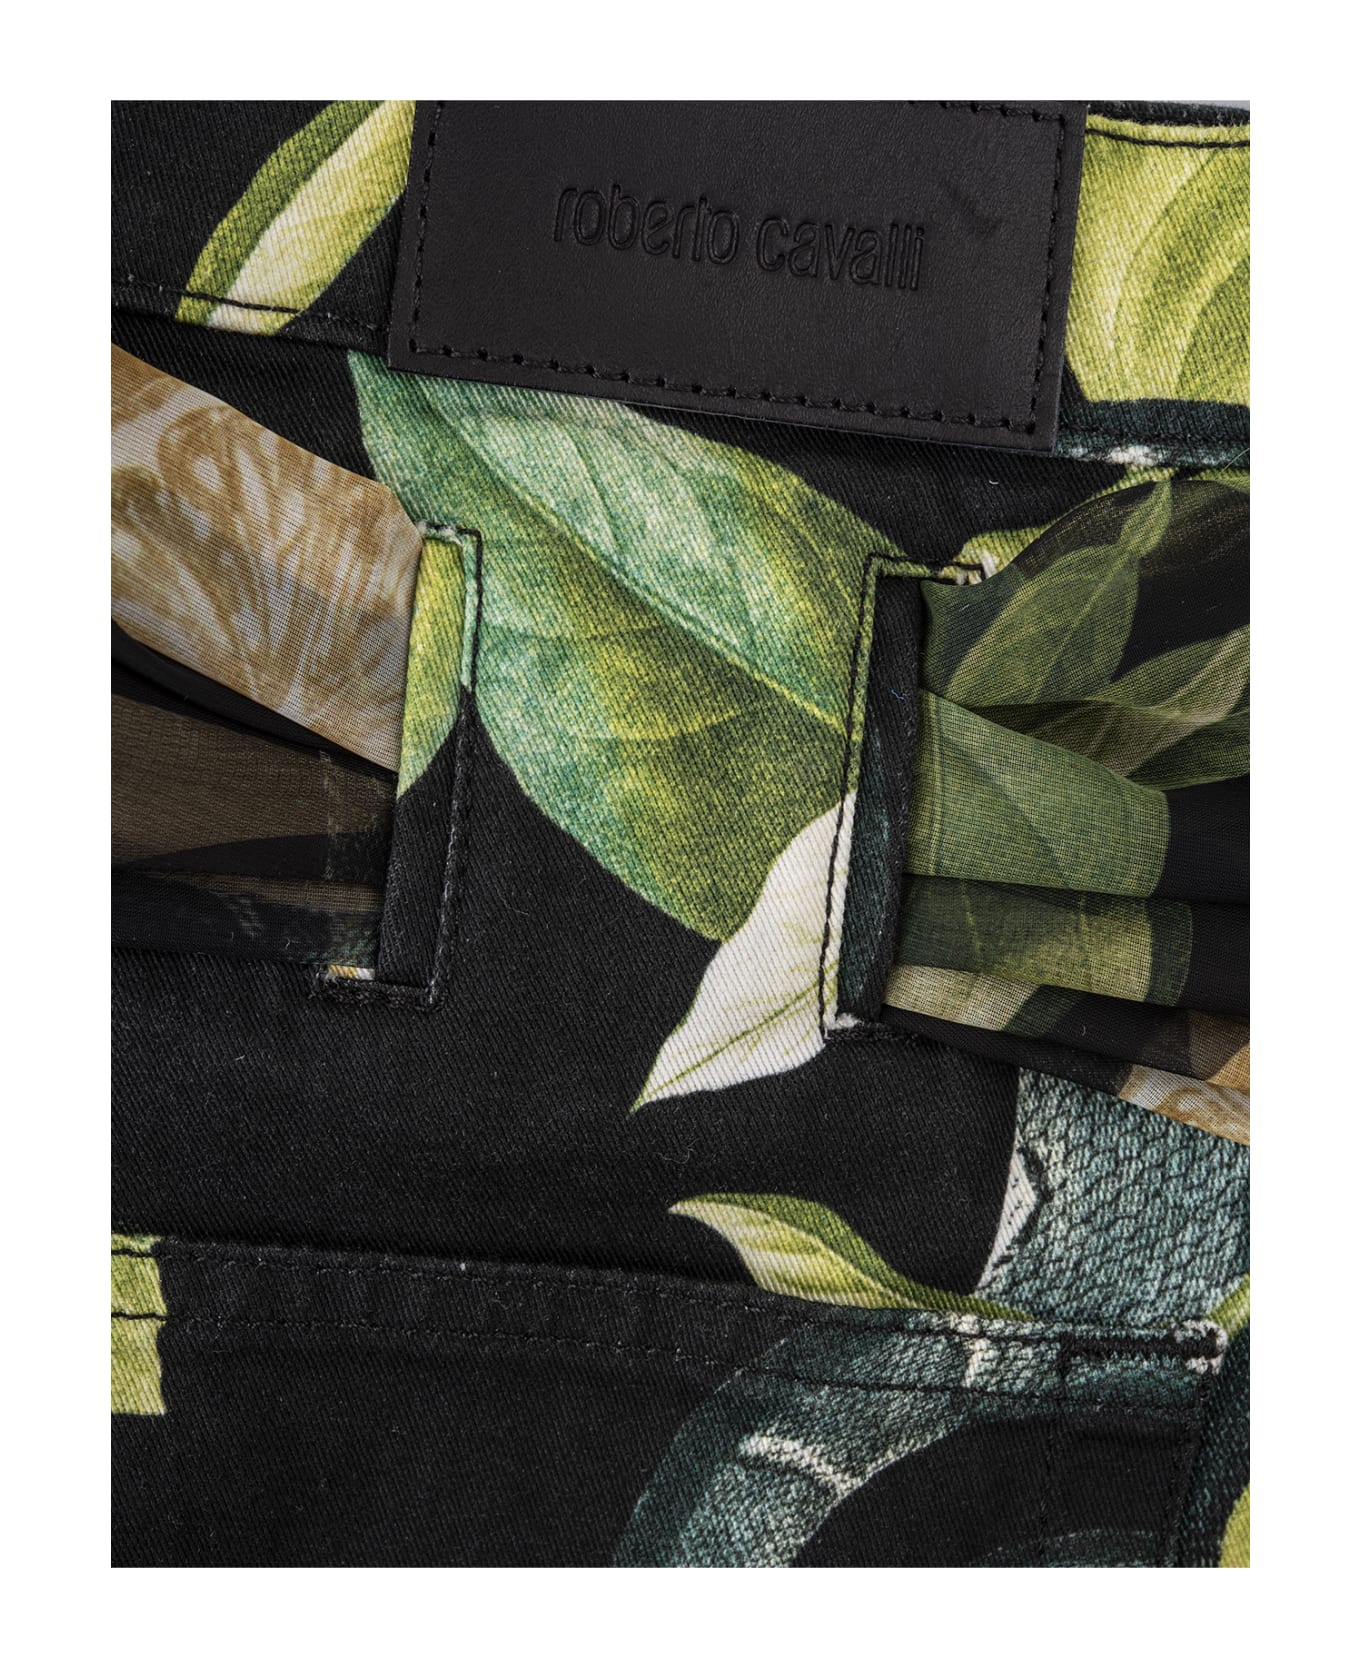 Roberto Cavalli Black Shorts With Lemons Print - Black ショートパンツ